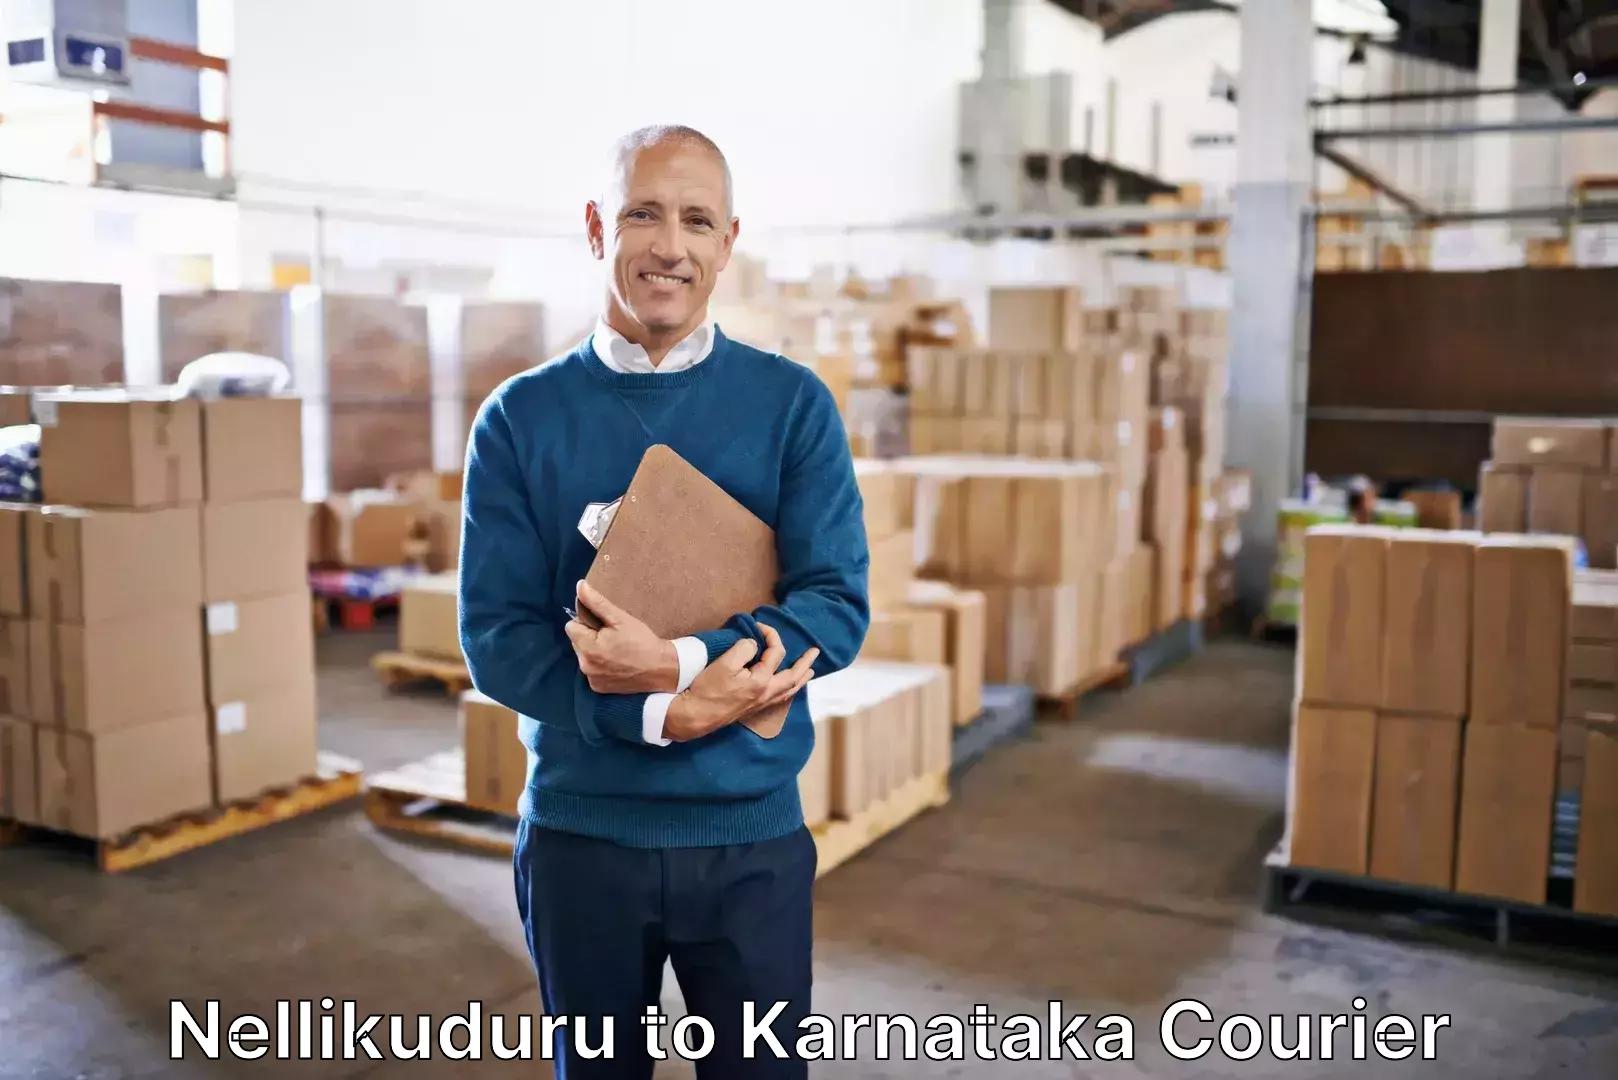 Baggage shipping experience Nellikuduru to Karnataka